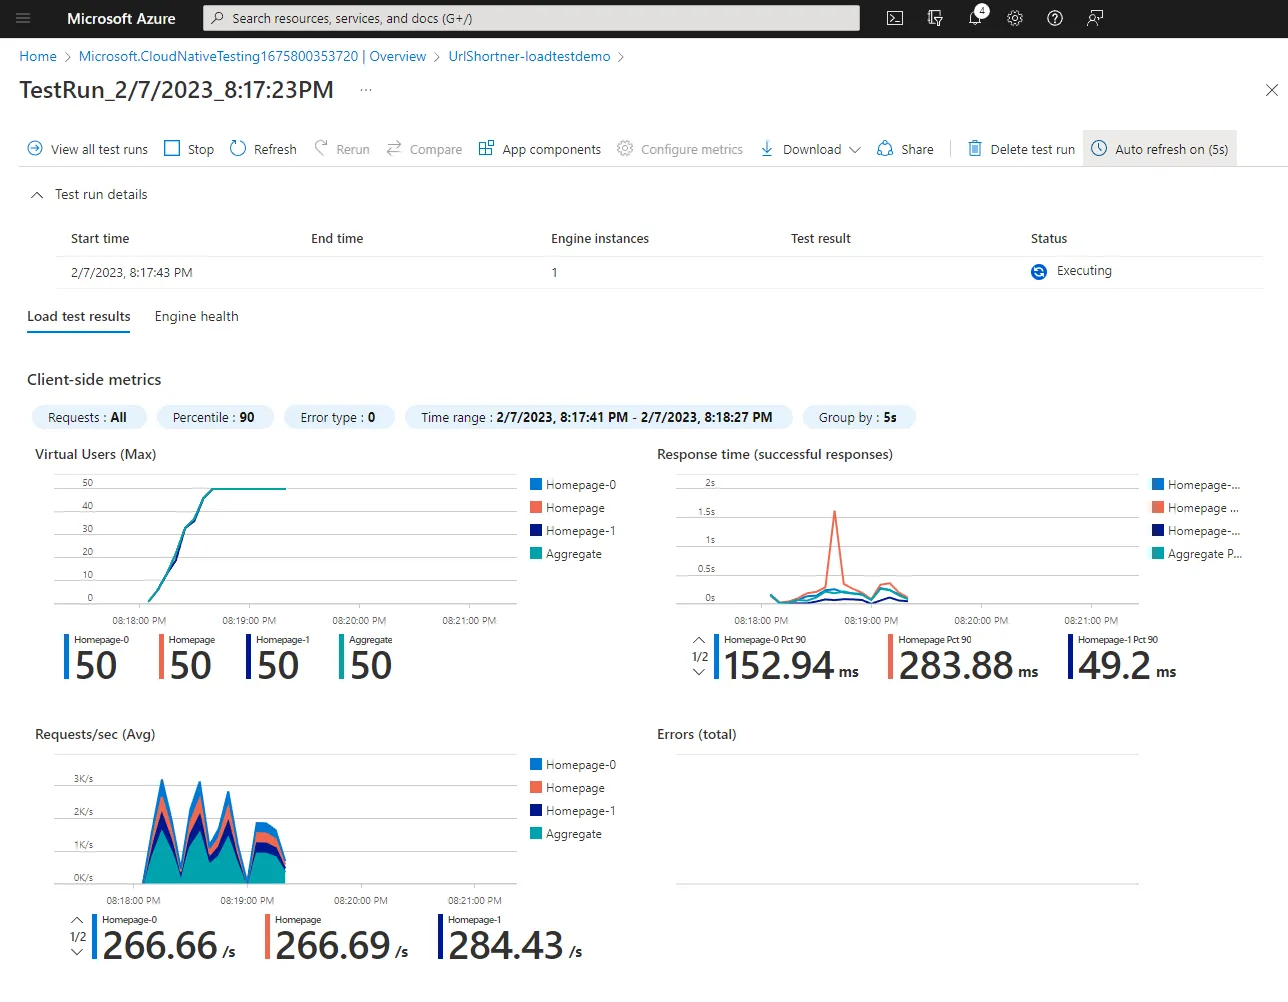 Load Testing Running Screenshot from the Azure Portal